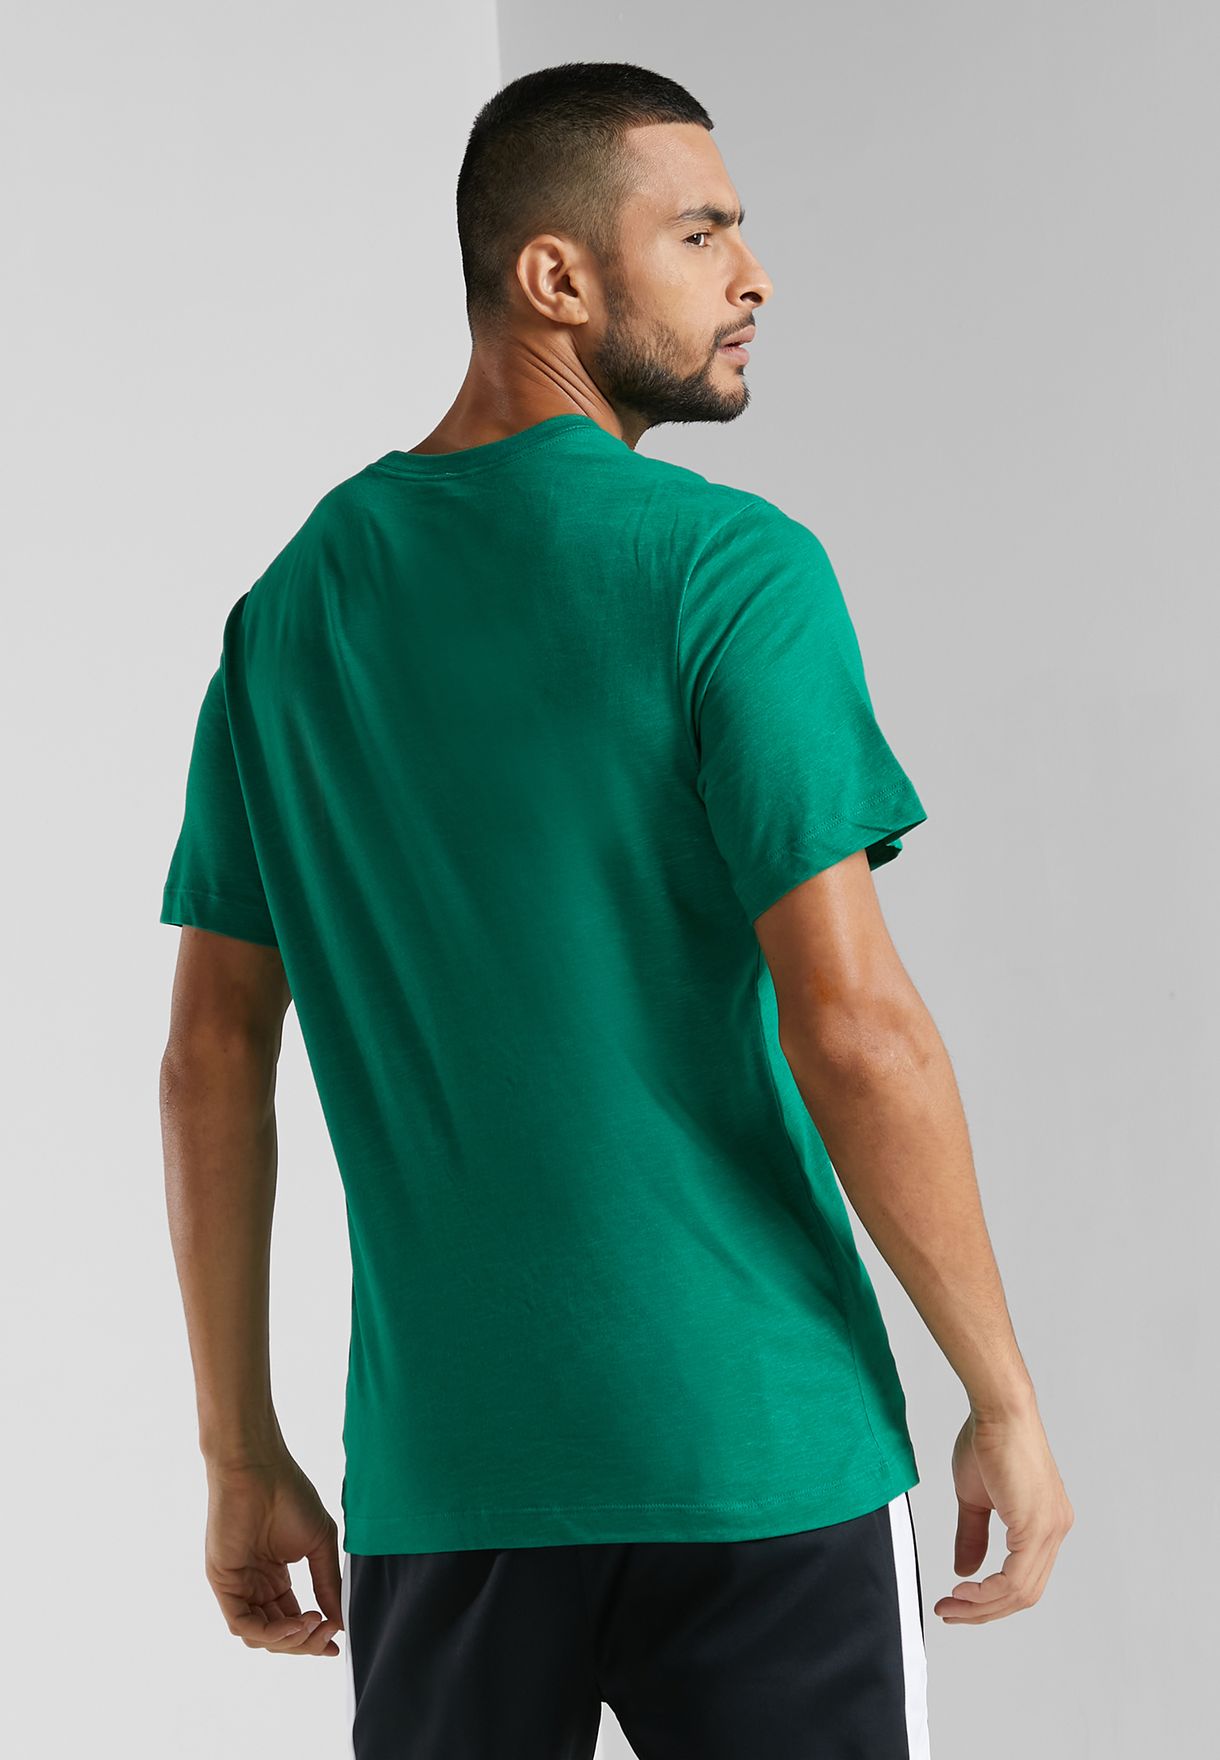 Boston Celtics Mantra T-Shirt